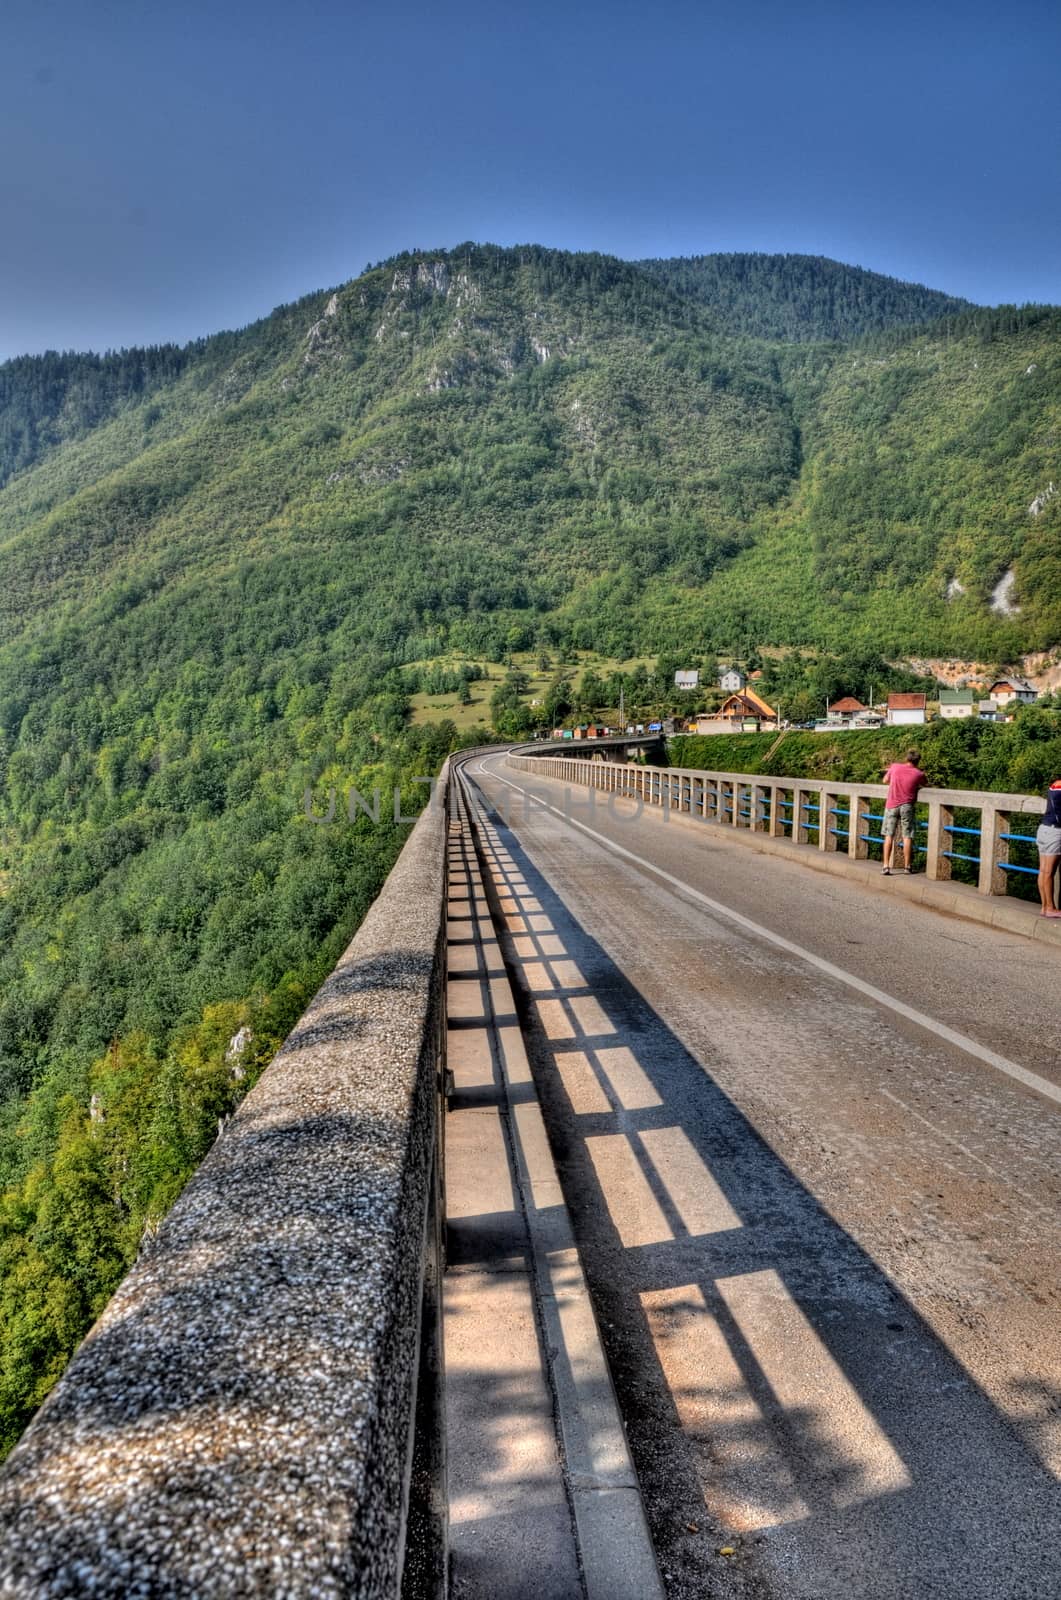 Tara bridge in Monte Negro by anderm